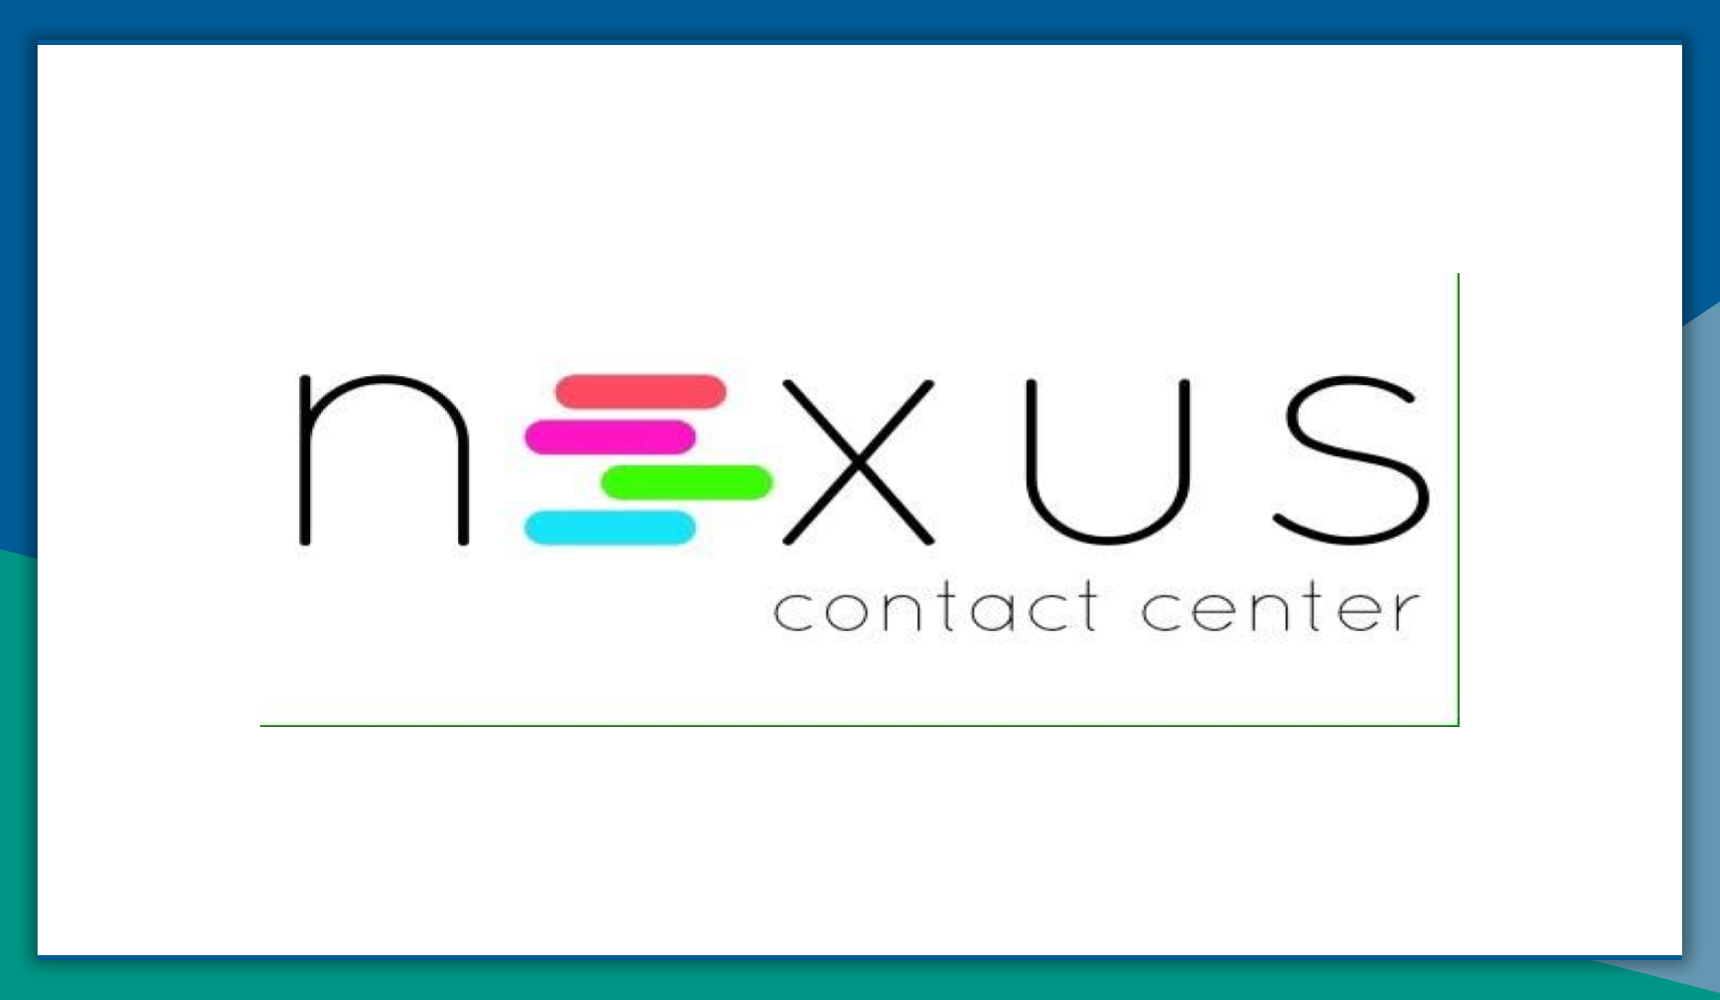 Nexus Contact Center recrute Téléprospecteurs en prise de RDV